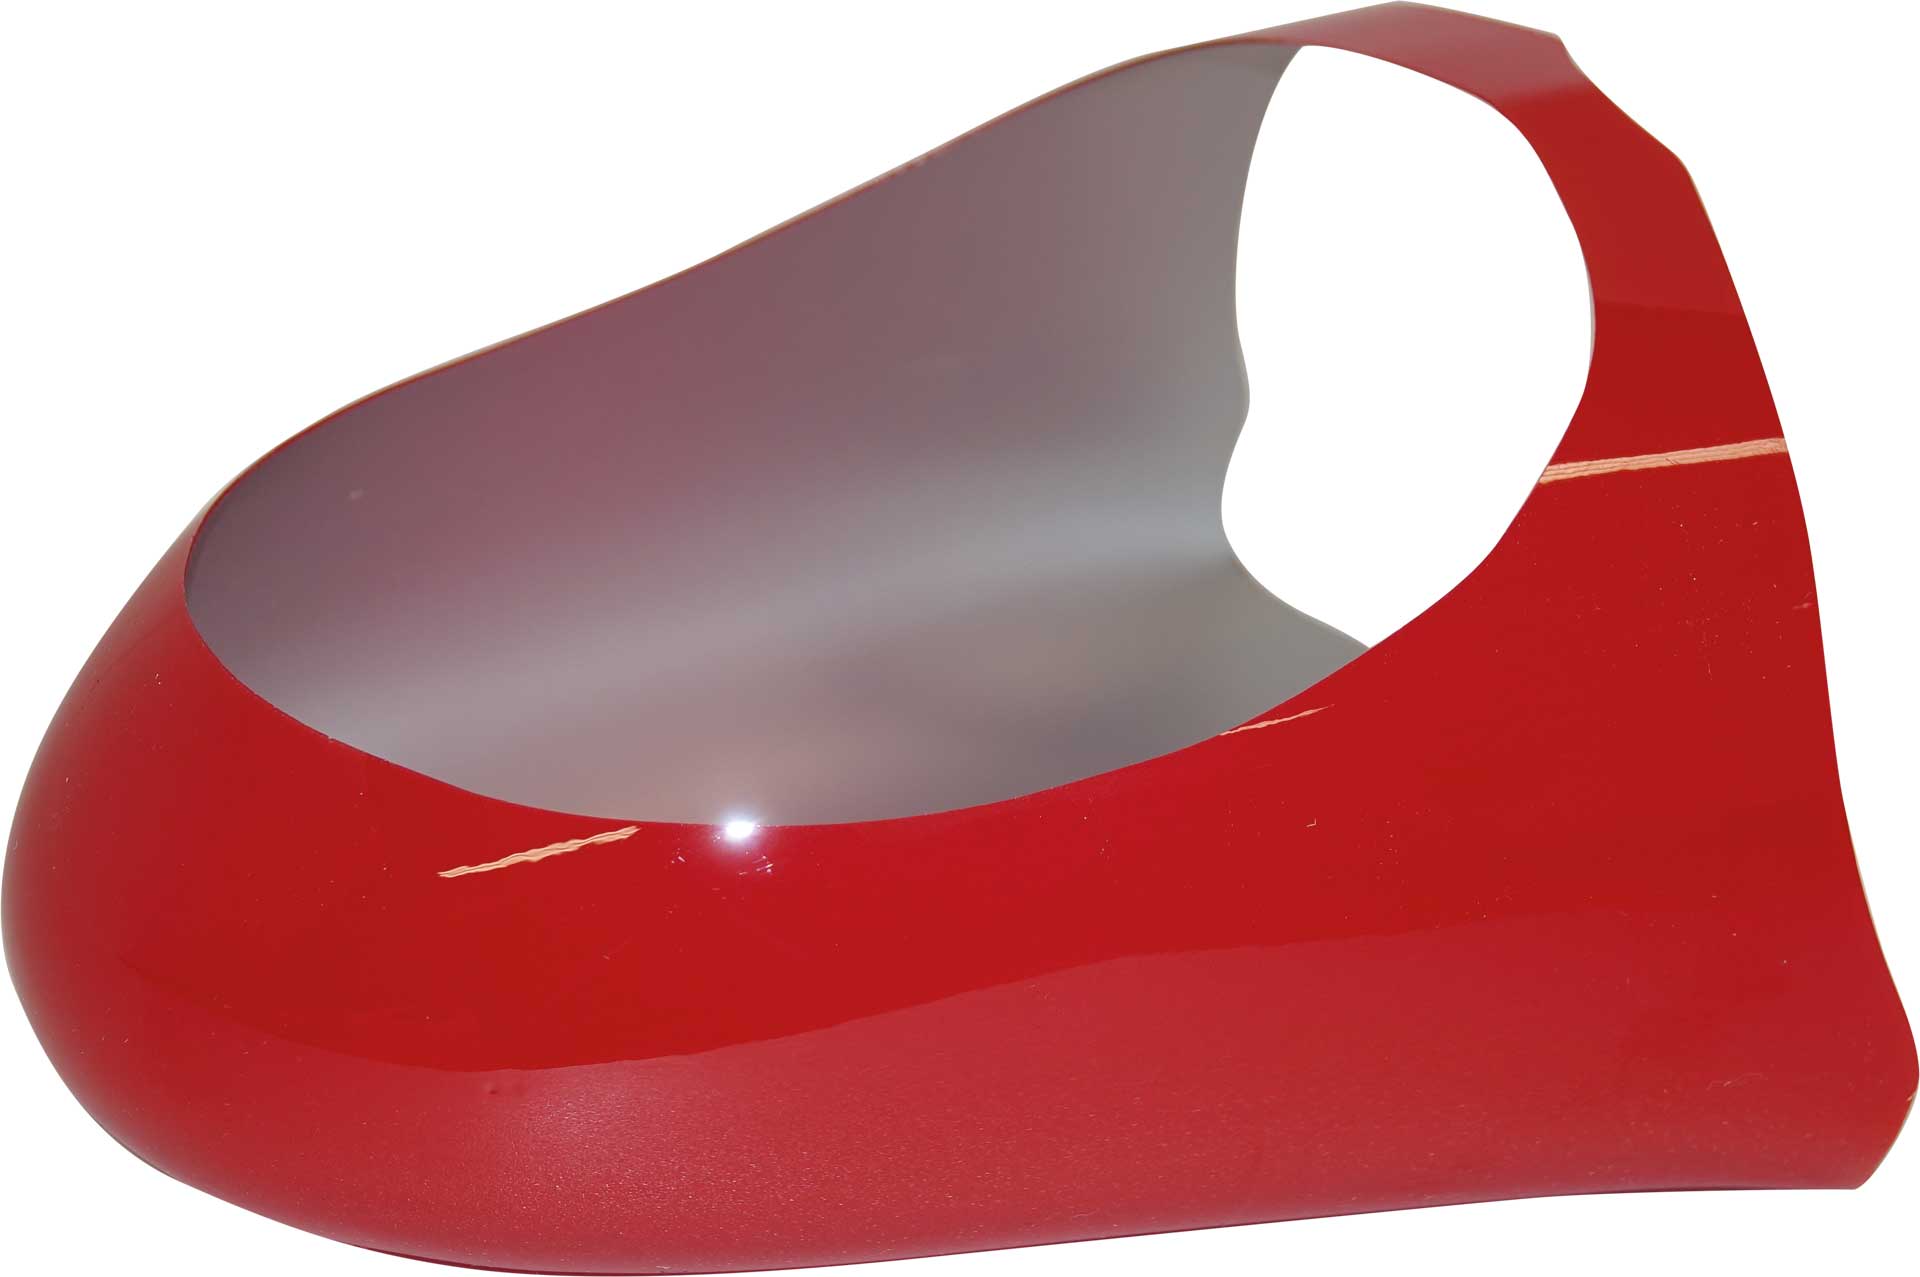 Robbe Modellsport Wingo 2 tronc nez rouge